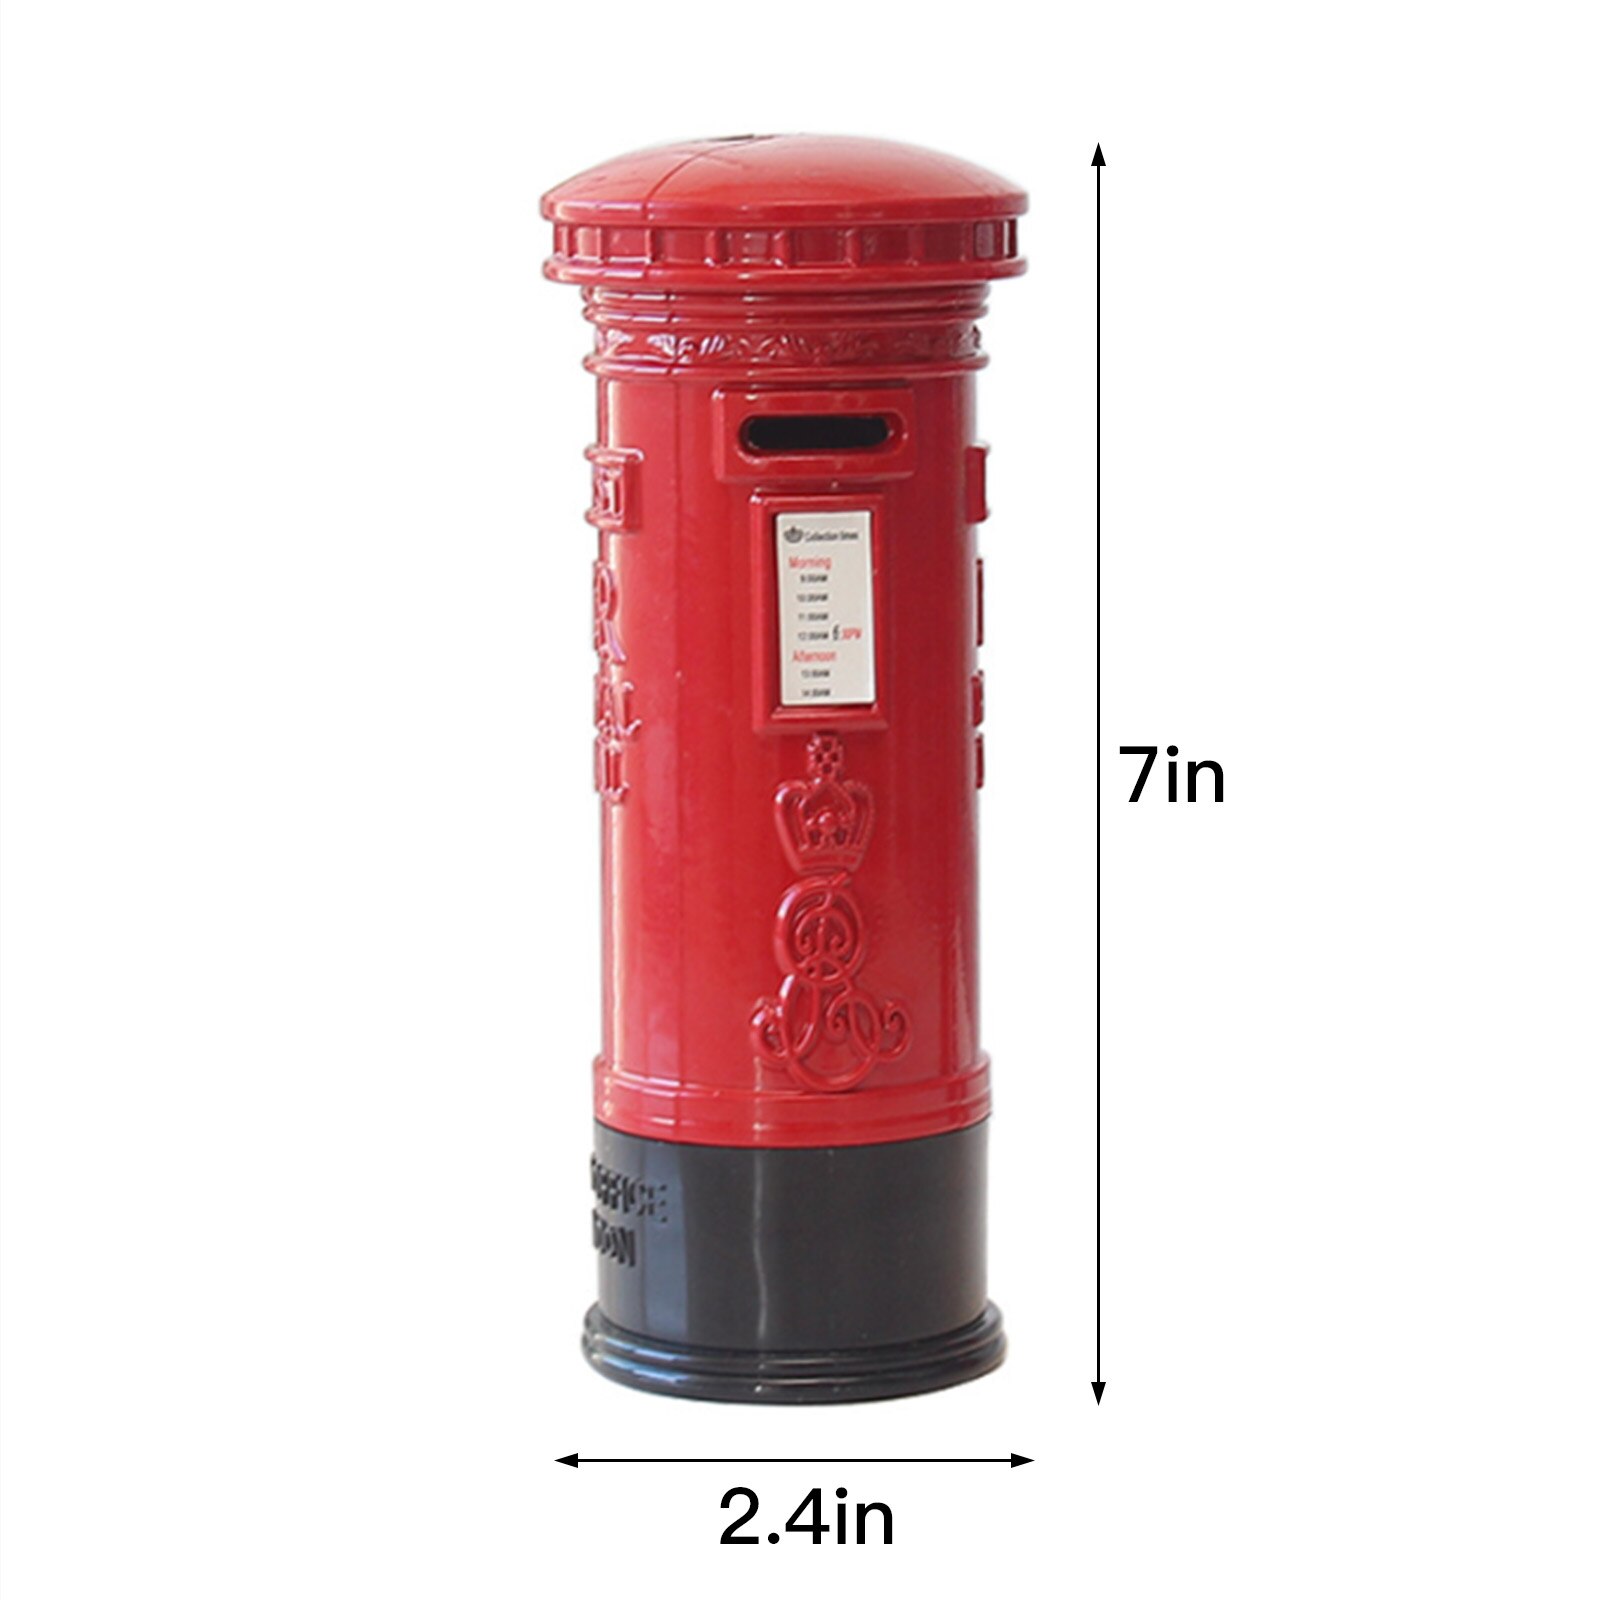 Legering engelsk london telefonboks bank møntbank sparekasse sparegris rød telefonboks